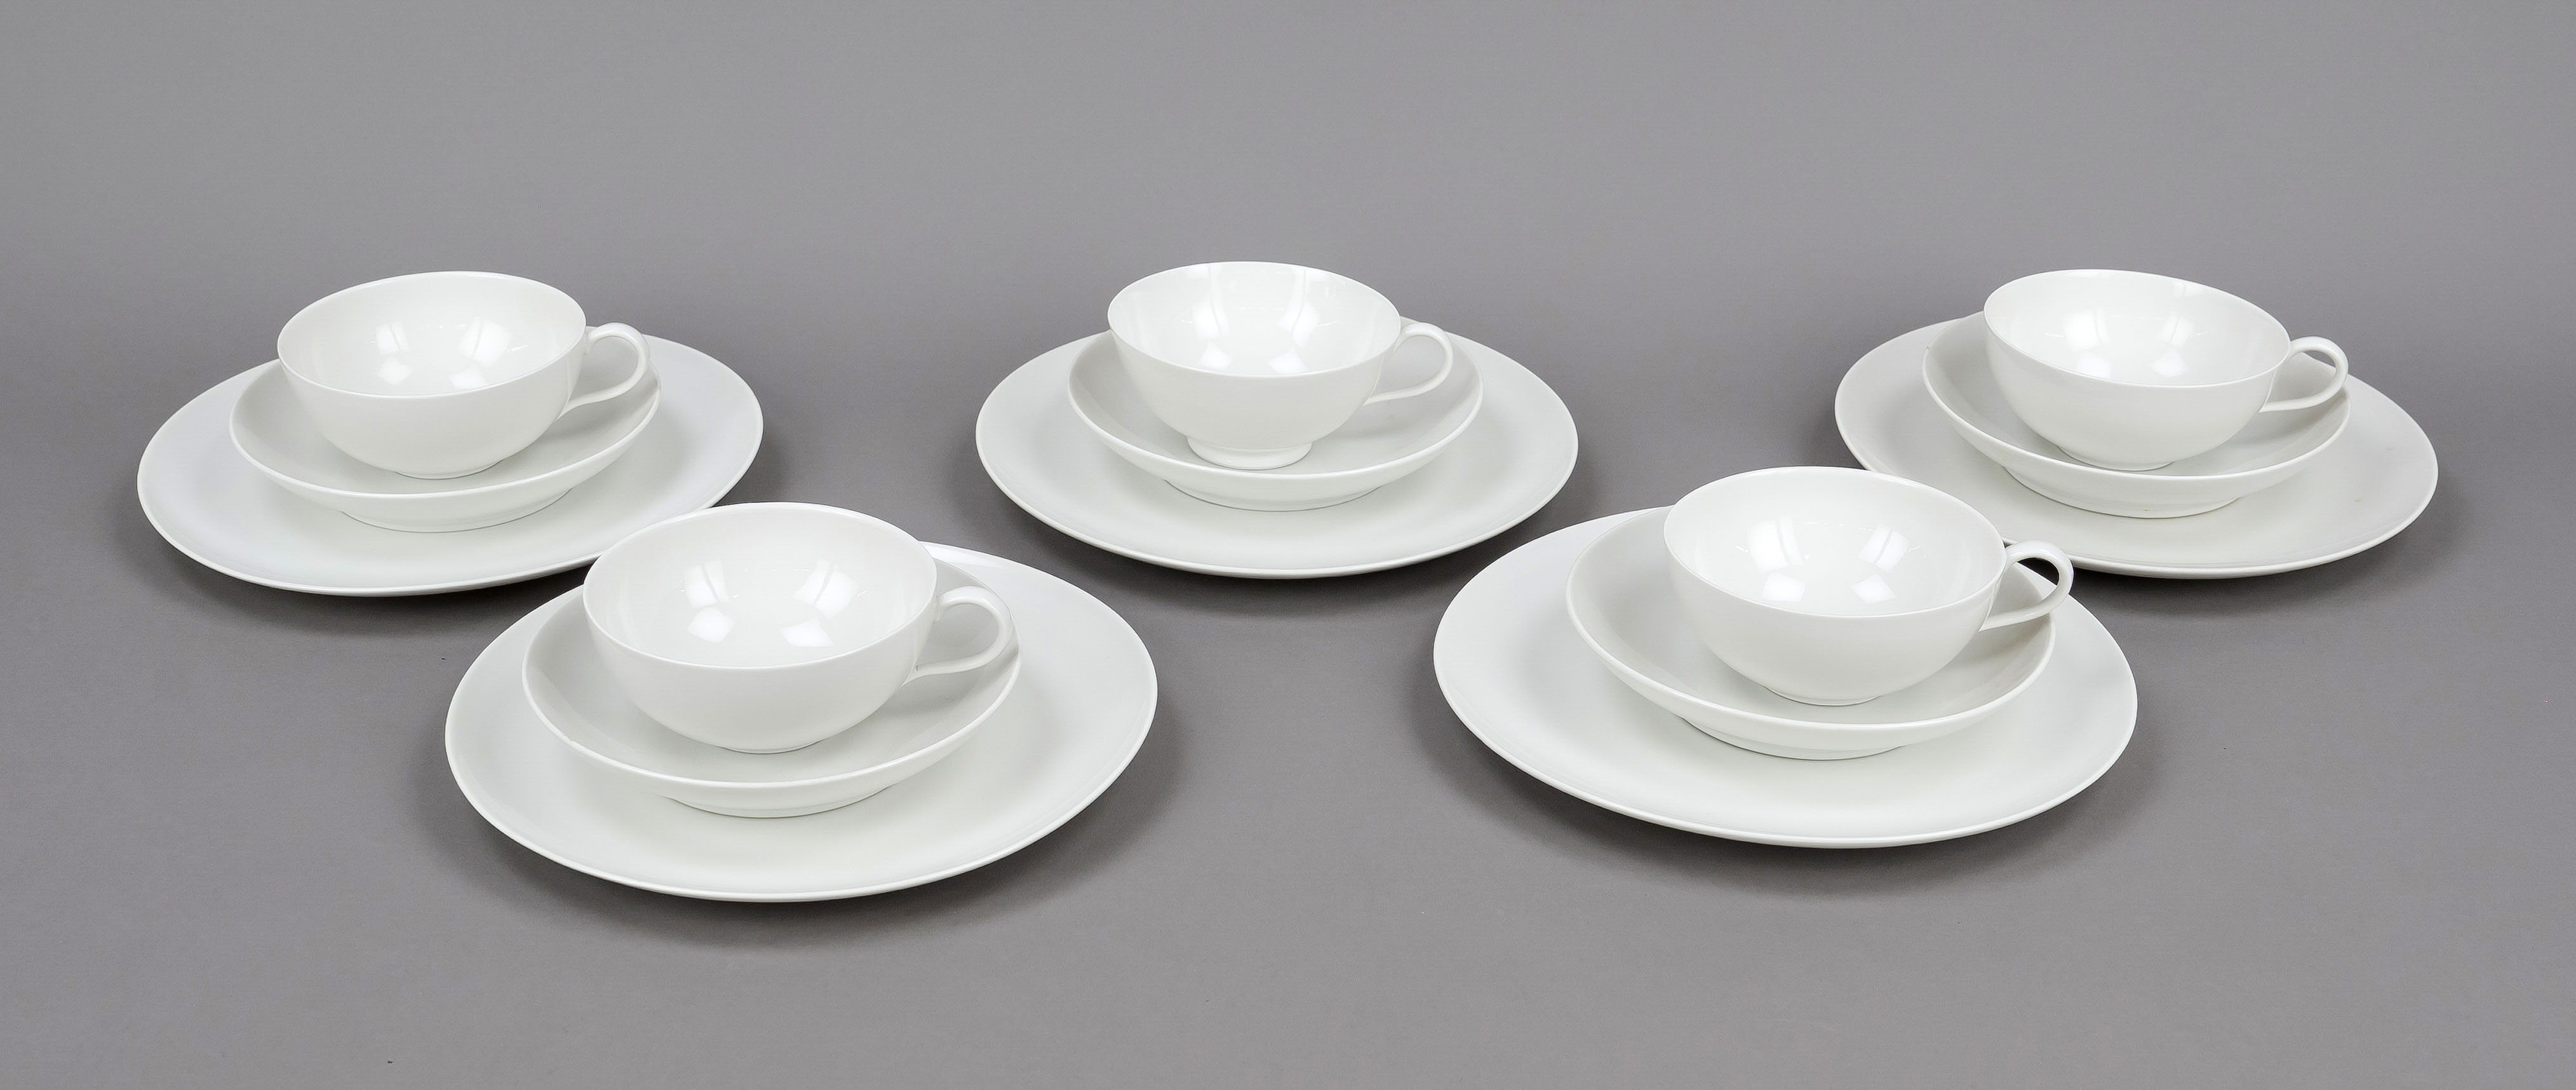 Five tea sets, KPM Berlin, pre-1945 mark, 1st choice, Urbino shape, designed by Trude Petri (Hamburg